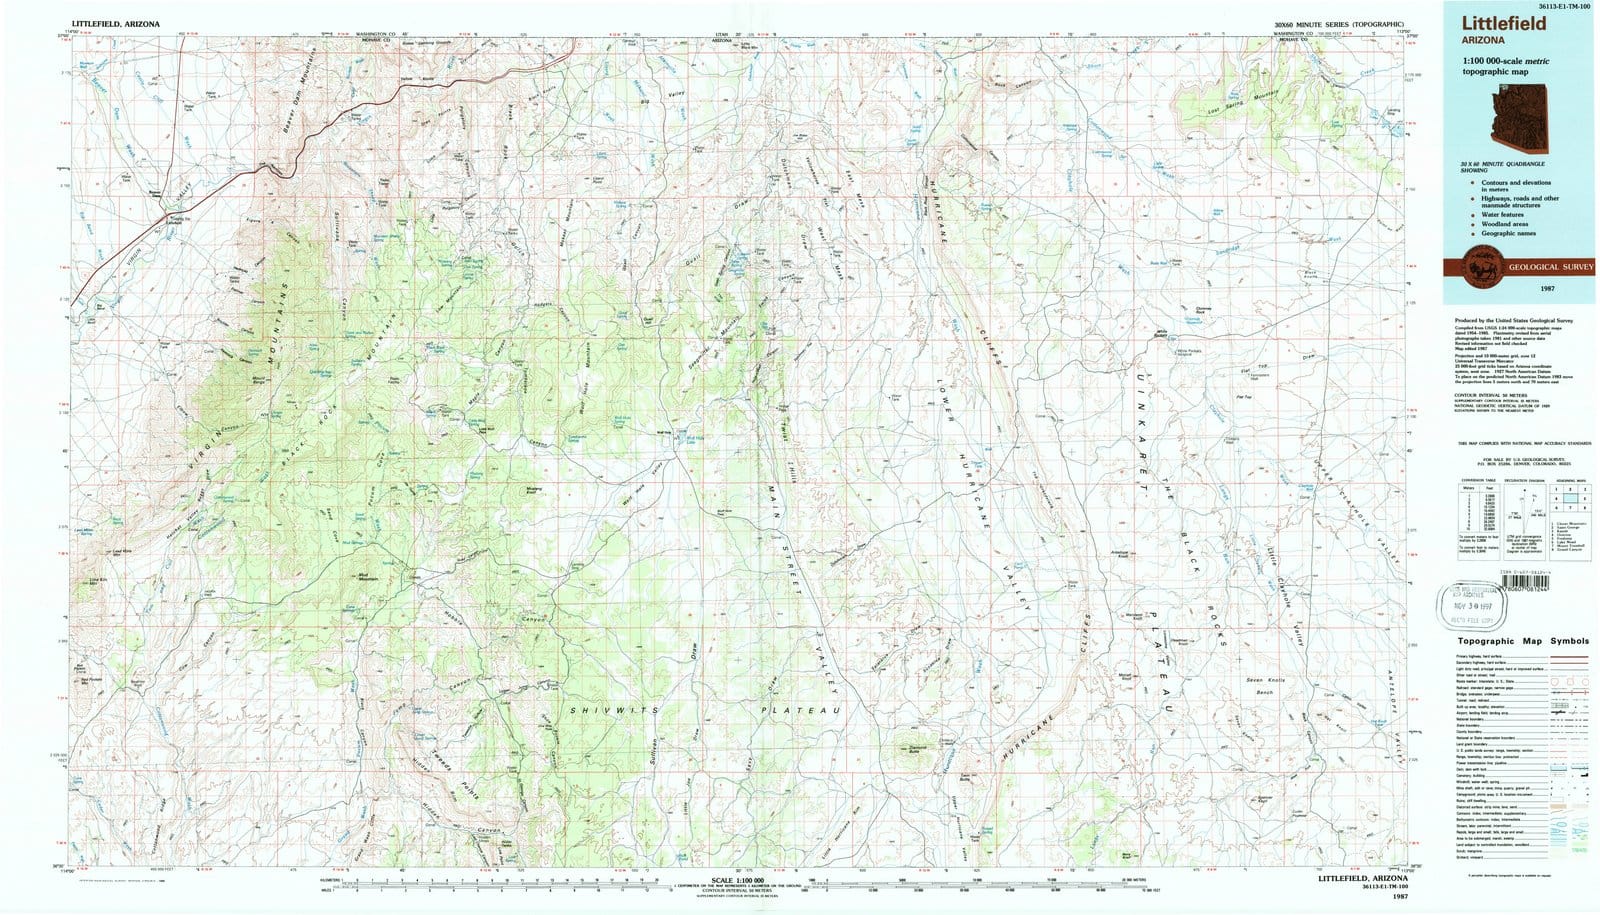 1987 Littlefield, AZ - Arizona - USGS Topographic Map